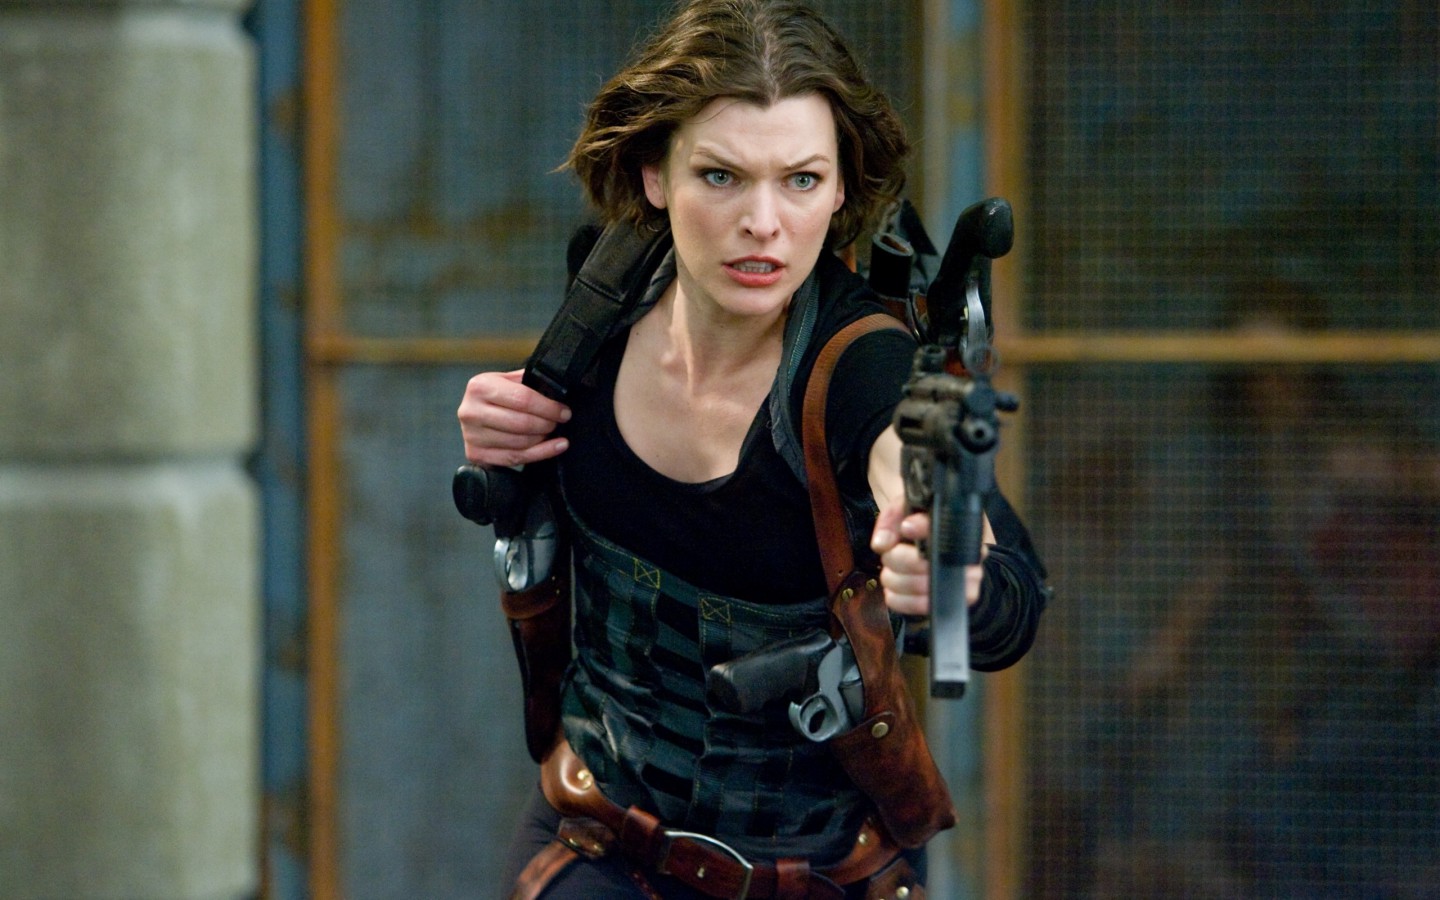 Resident Evil The Final Chapter trailer: Milla Jovovich reveals teaser